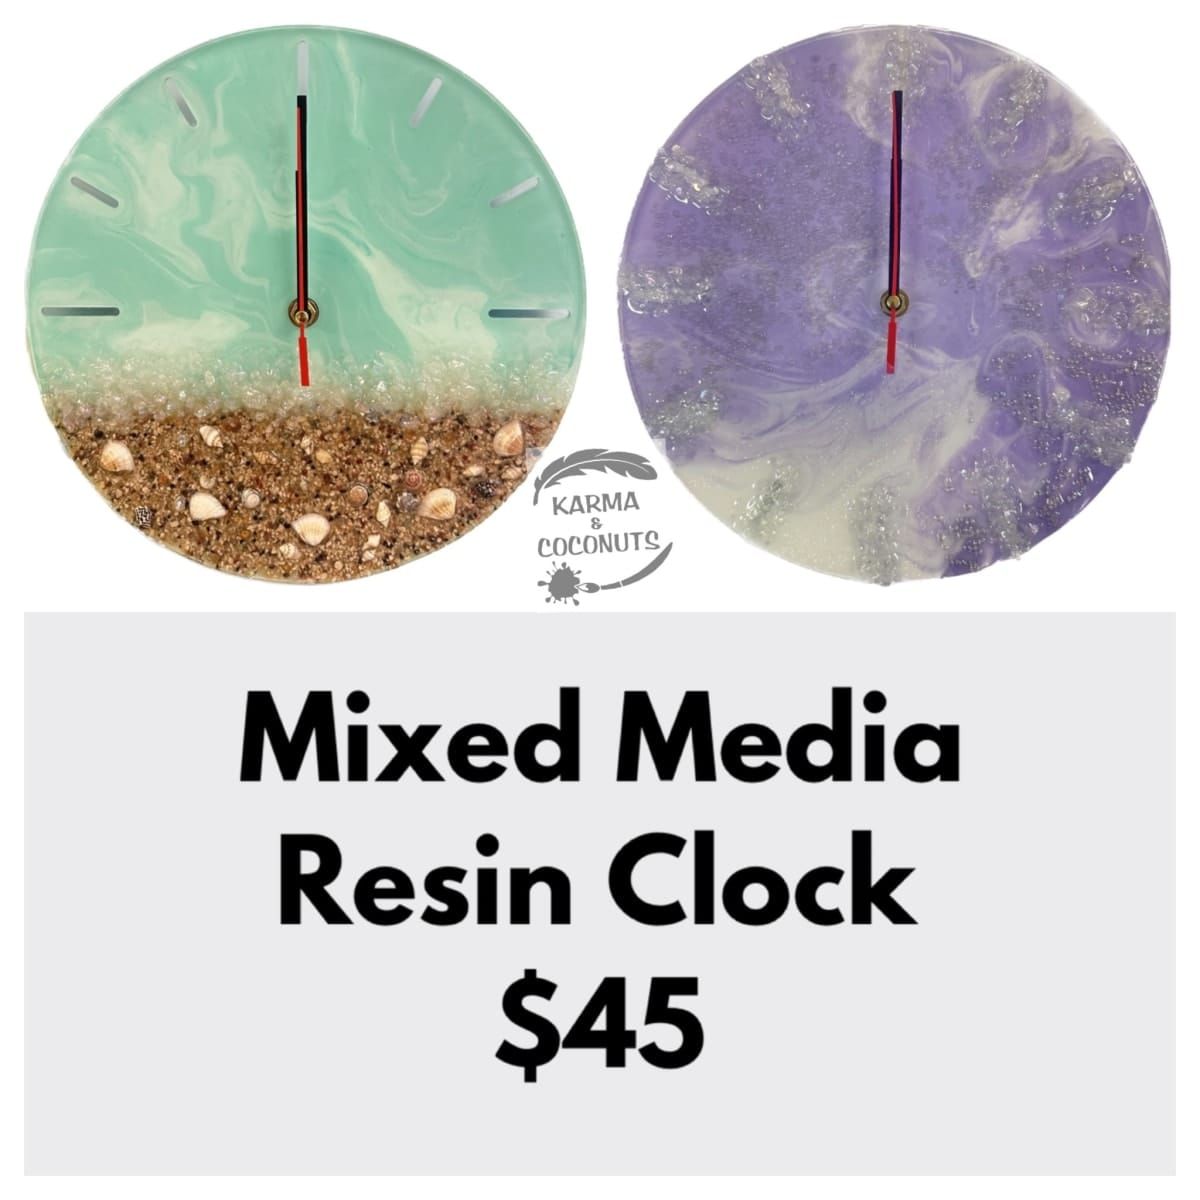 Mixed Media Resin Clock - $45